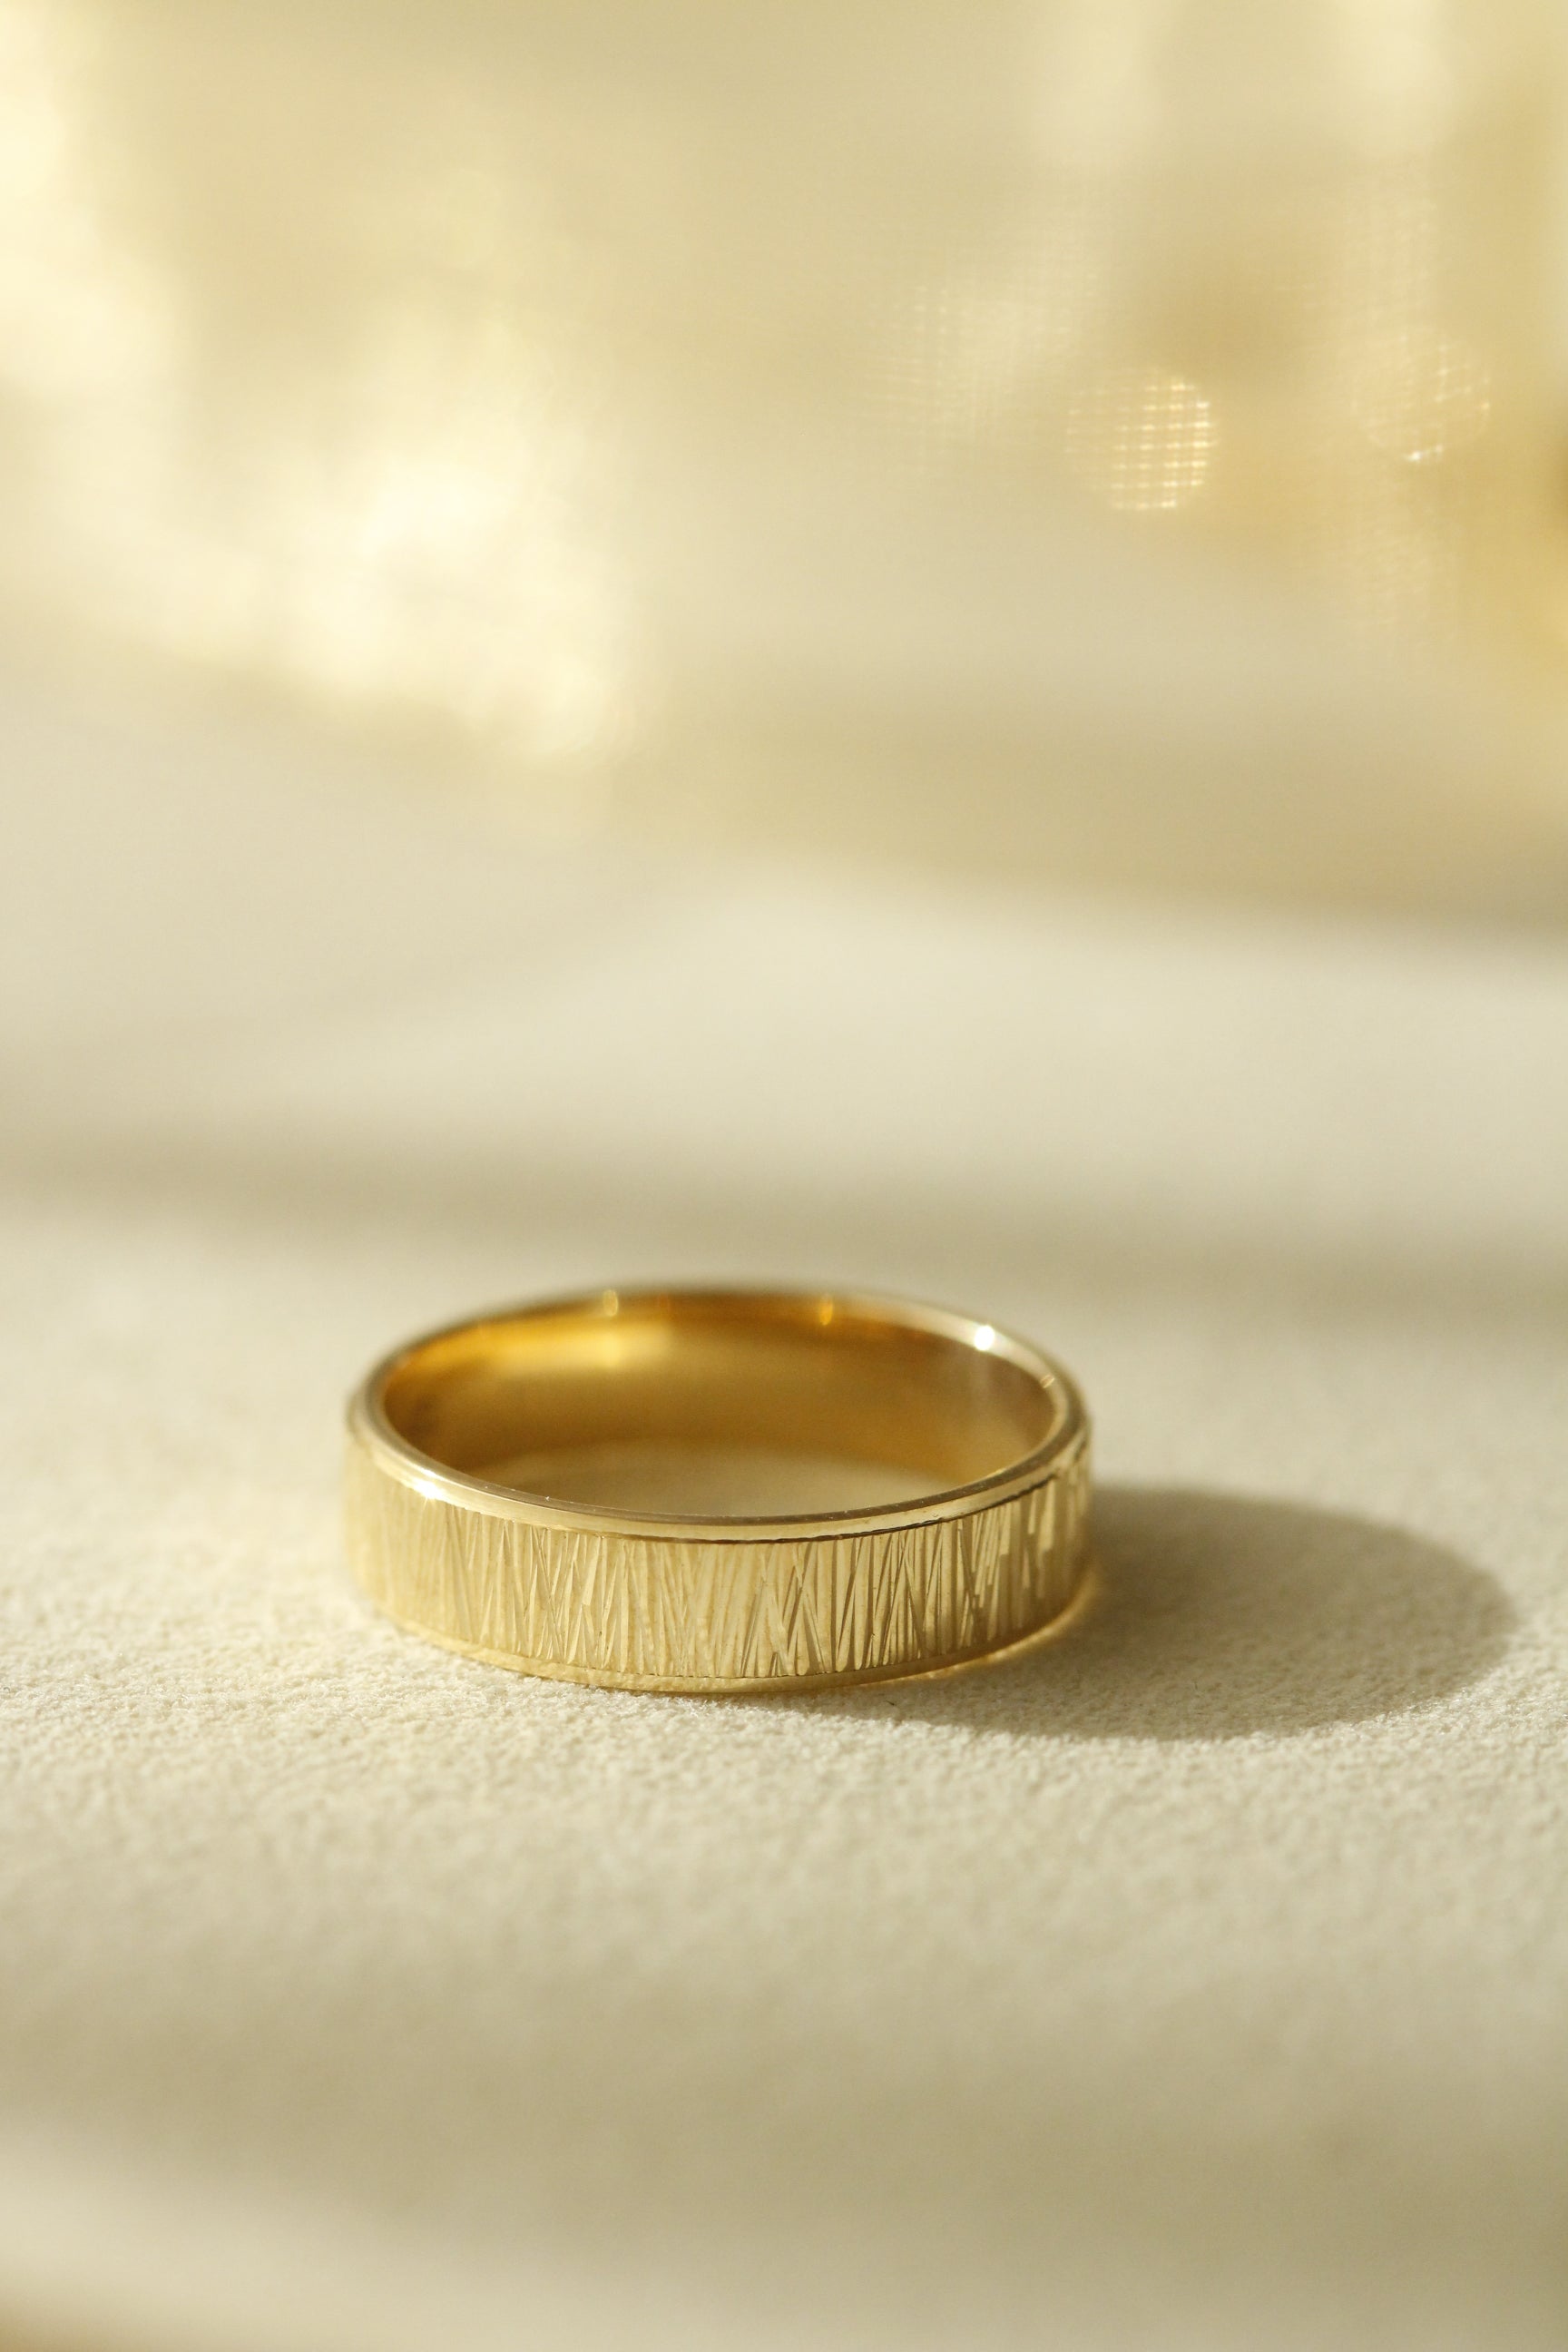 Yellow gold men's wedding ring design on white fabric